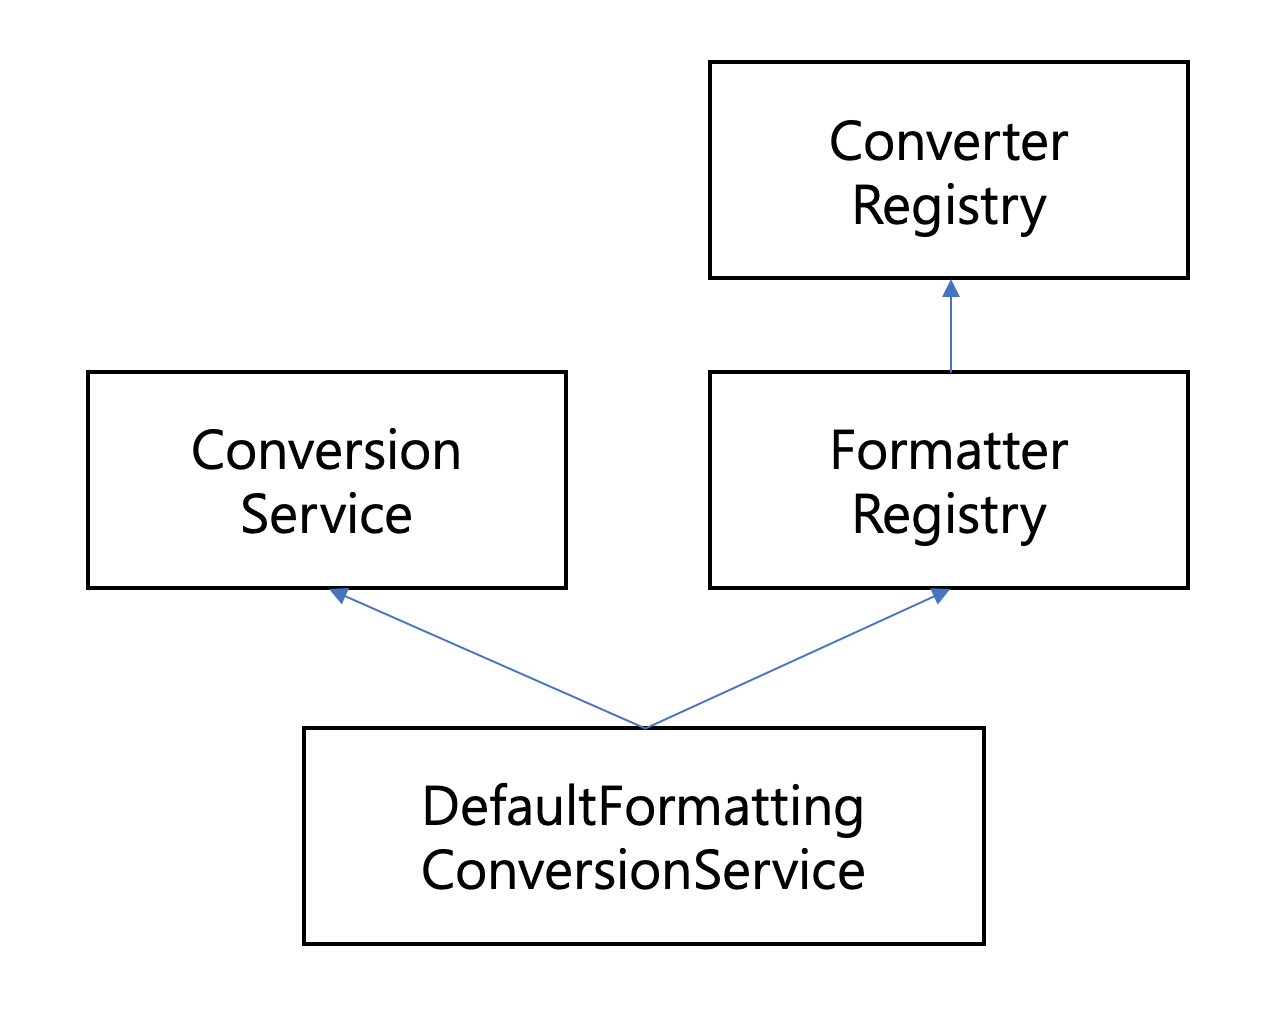 DefaultFormattingConversionService